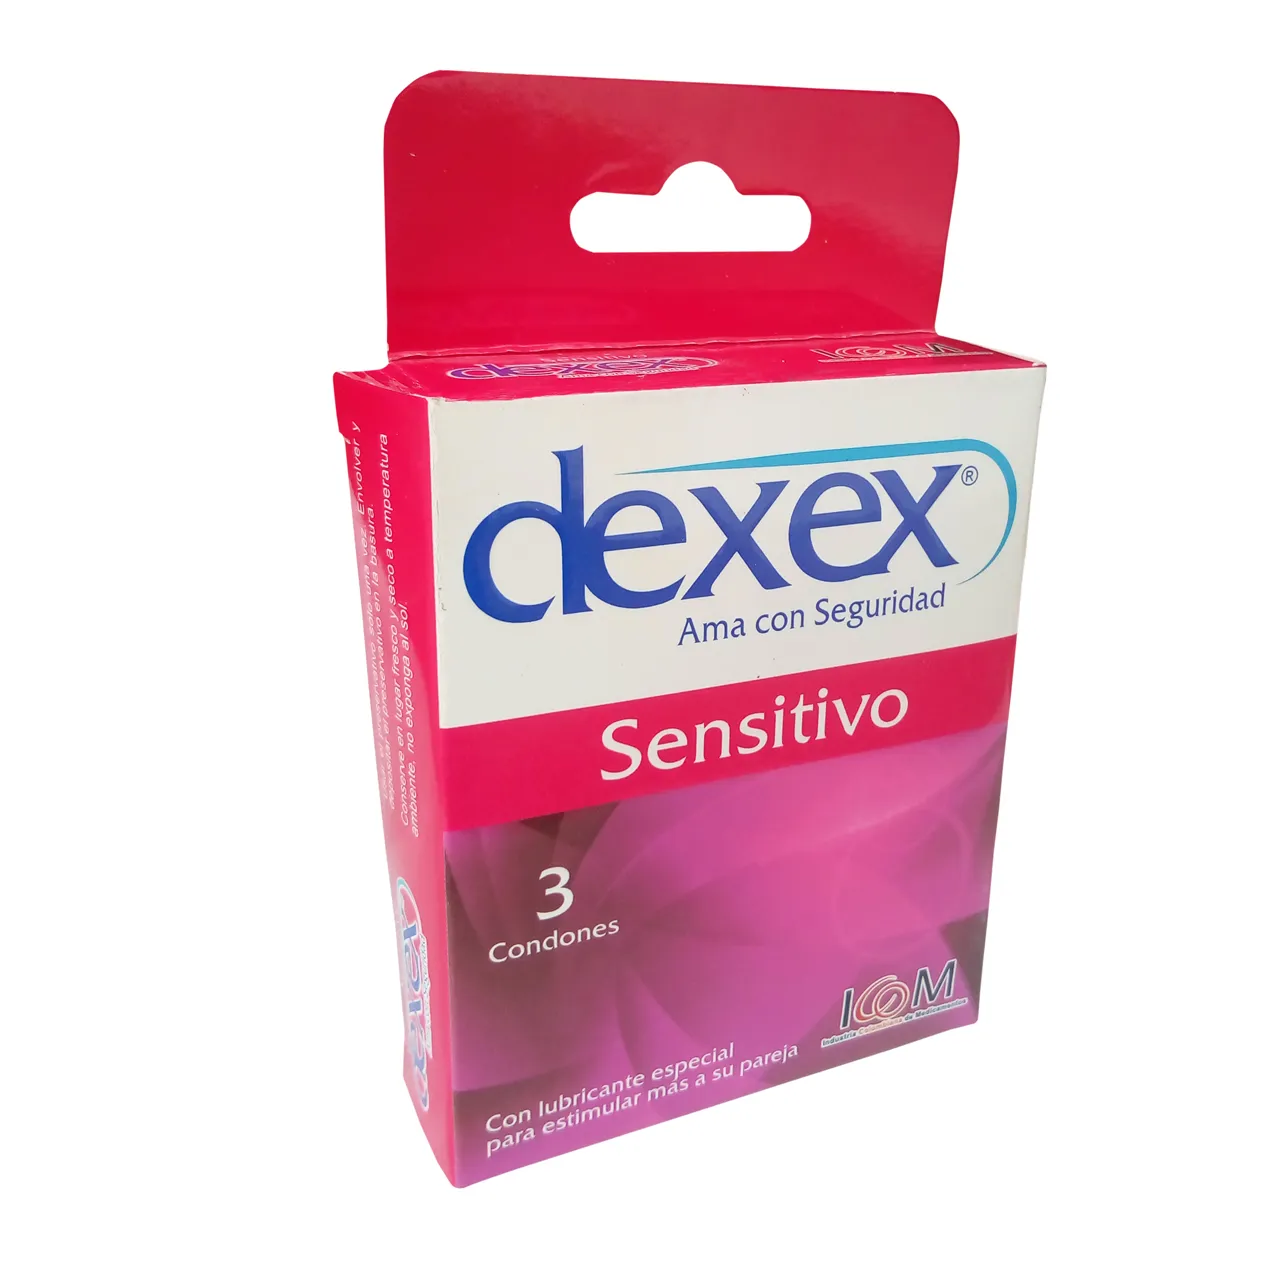 Preservativo Dexex Sensitivo 3 Uds Icom